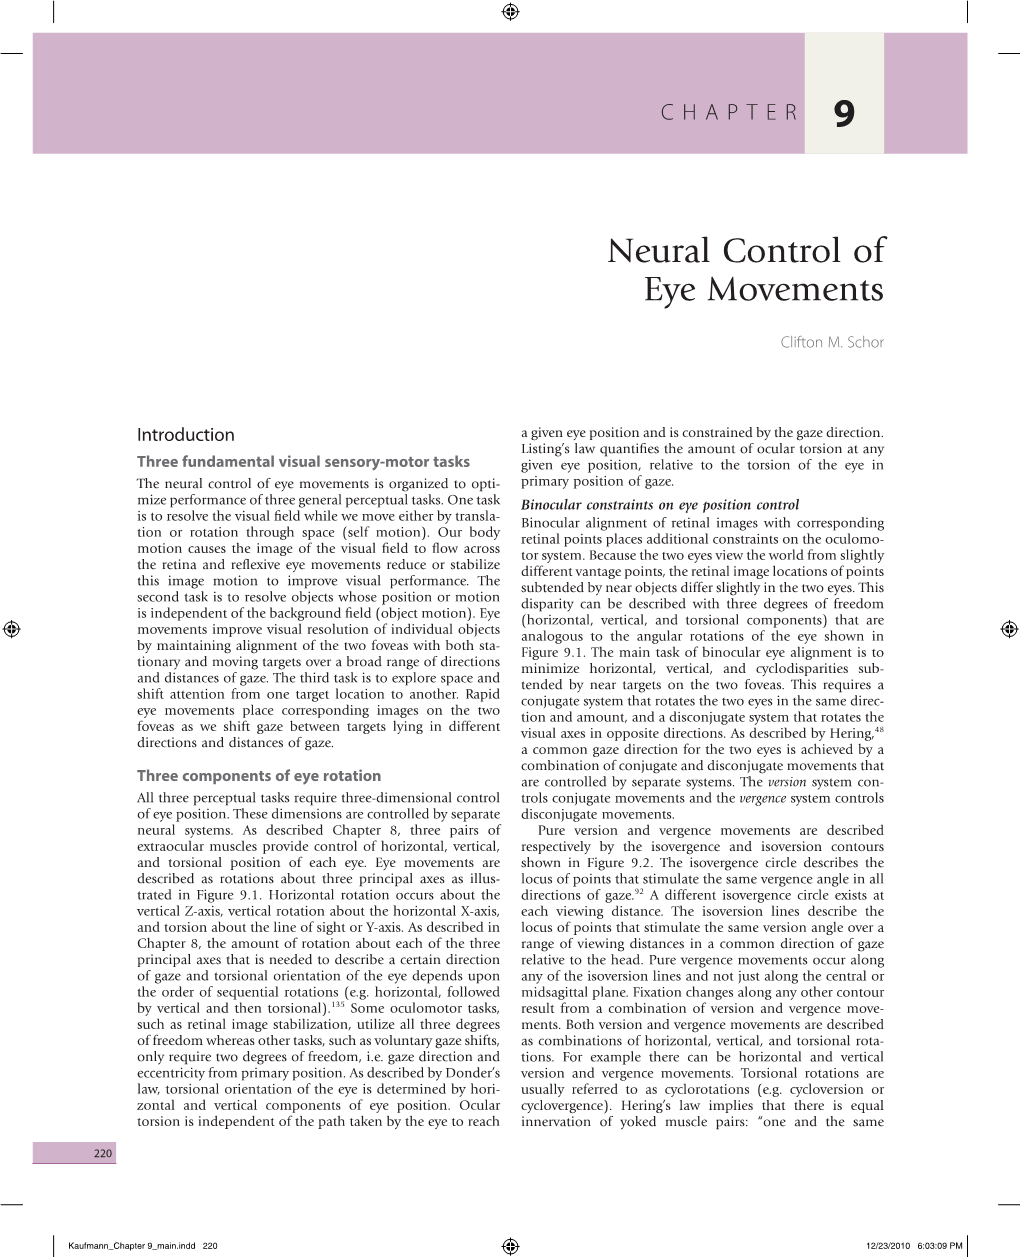 Neural Control of Eye Movements